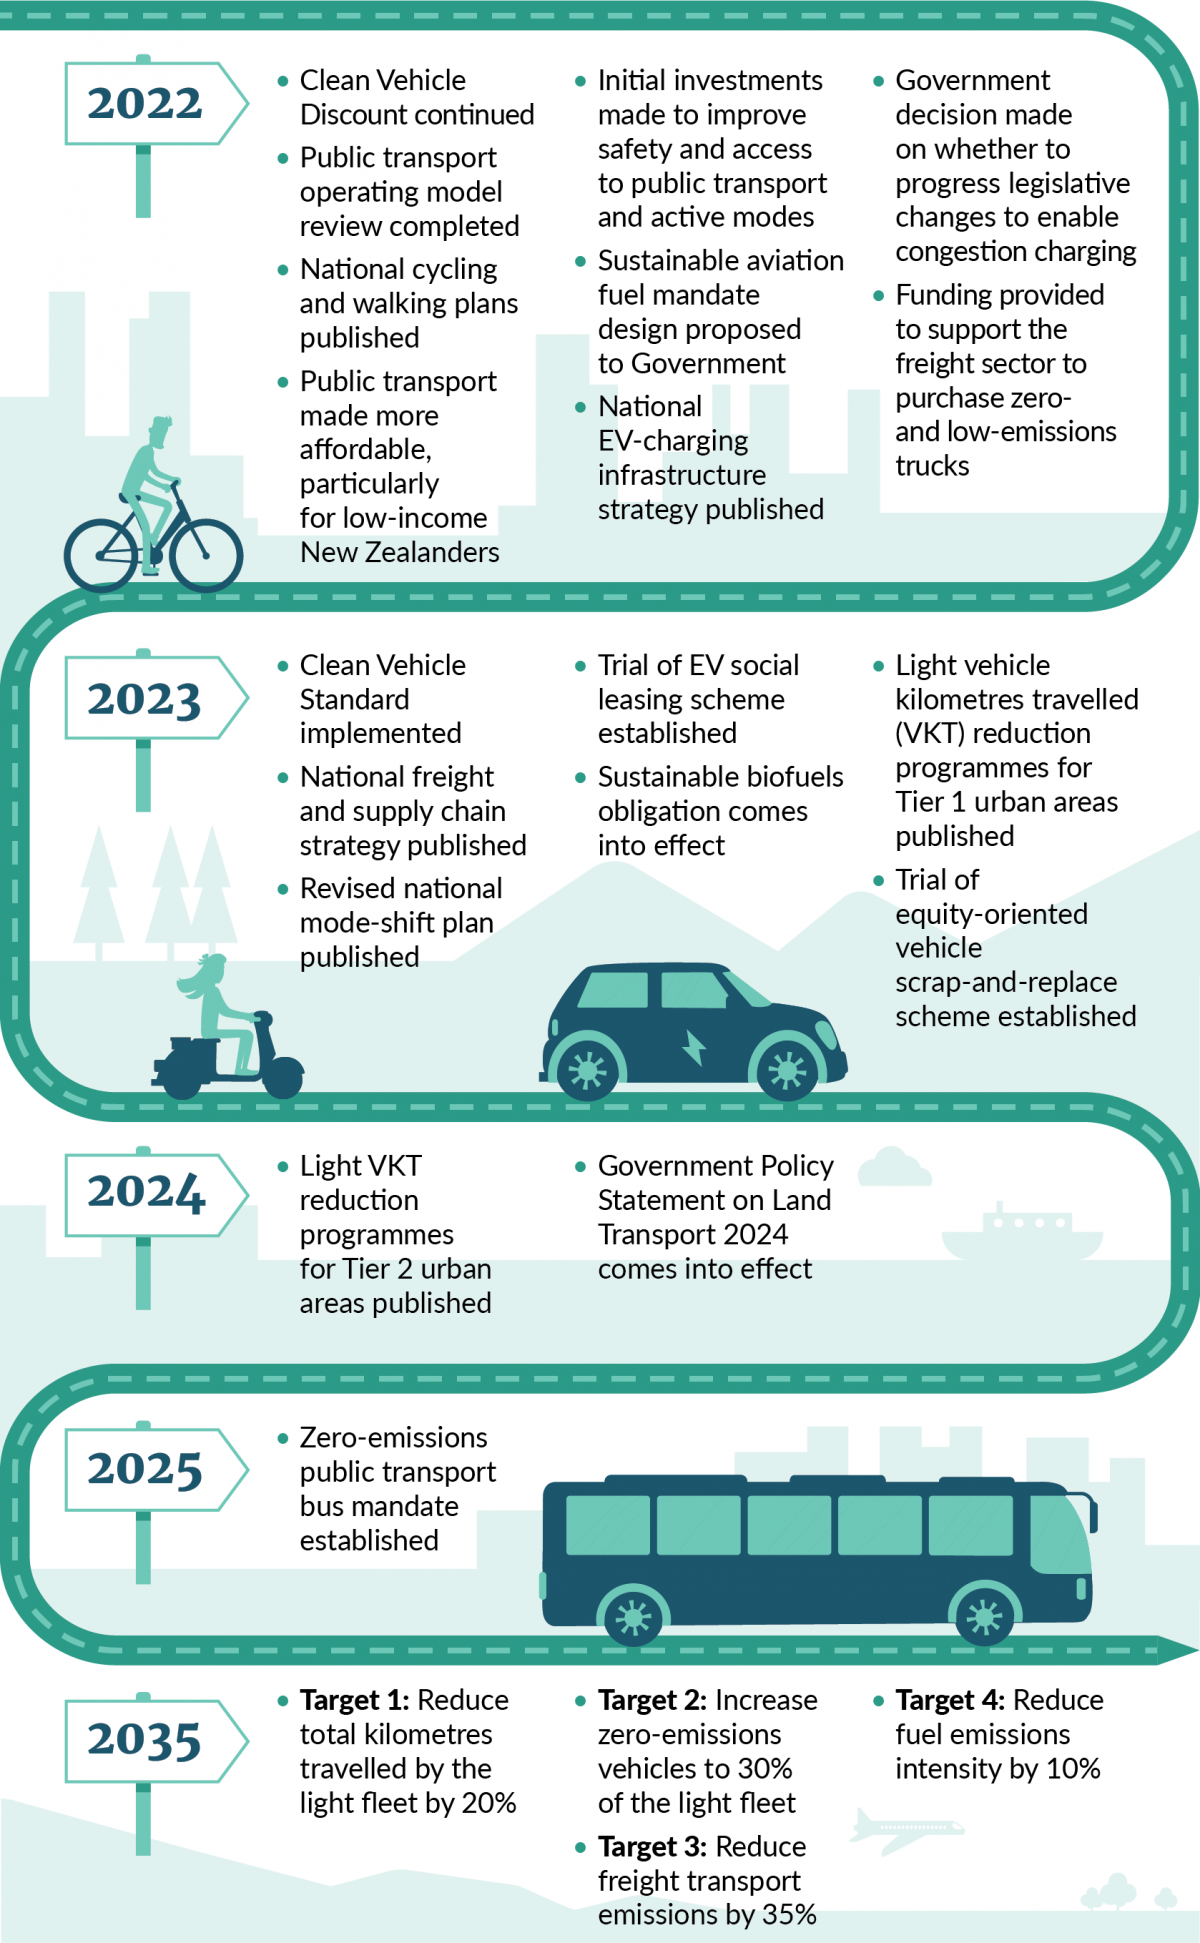 Economic Effects of Transportation Regulation Changes